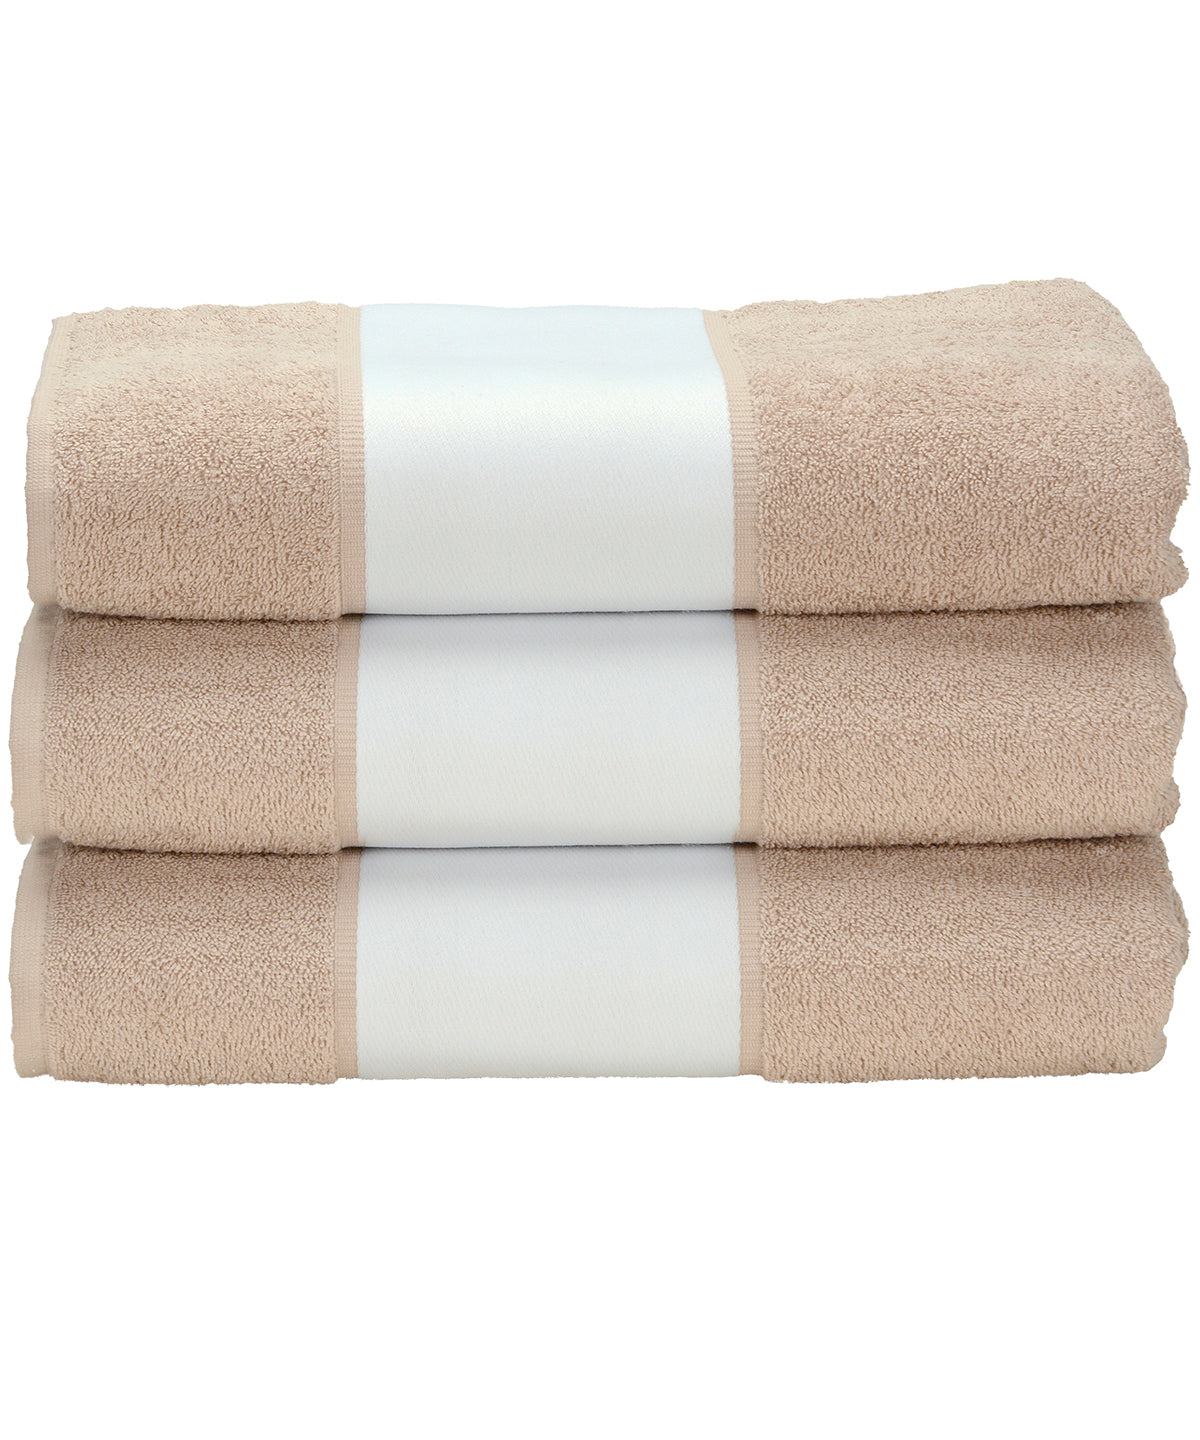 Personalised Towels - Natural A&R Towels ARTG® SUBLI-Me® hand towel